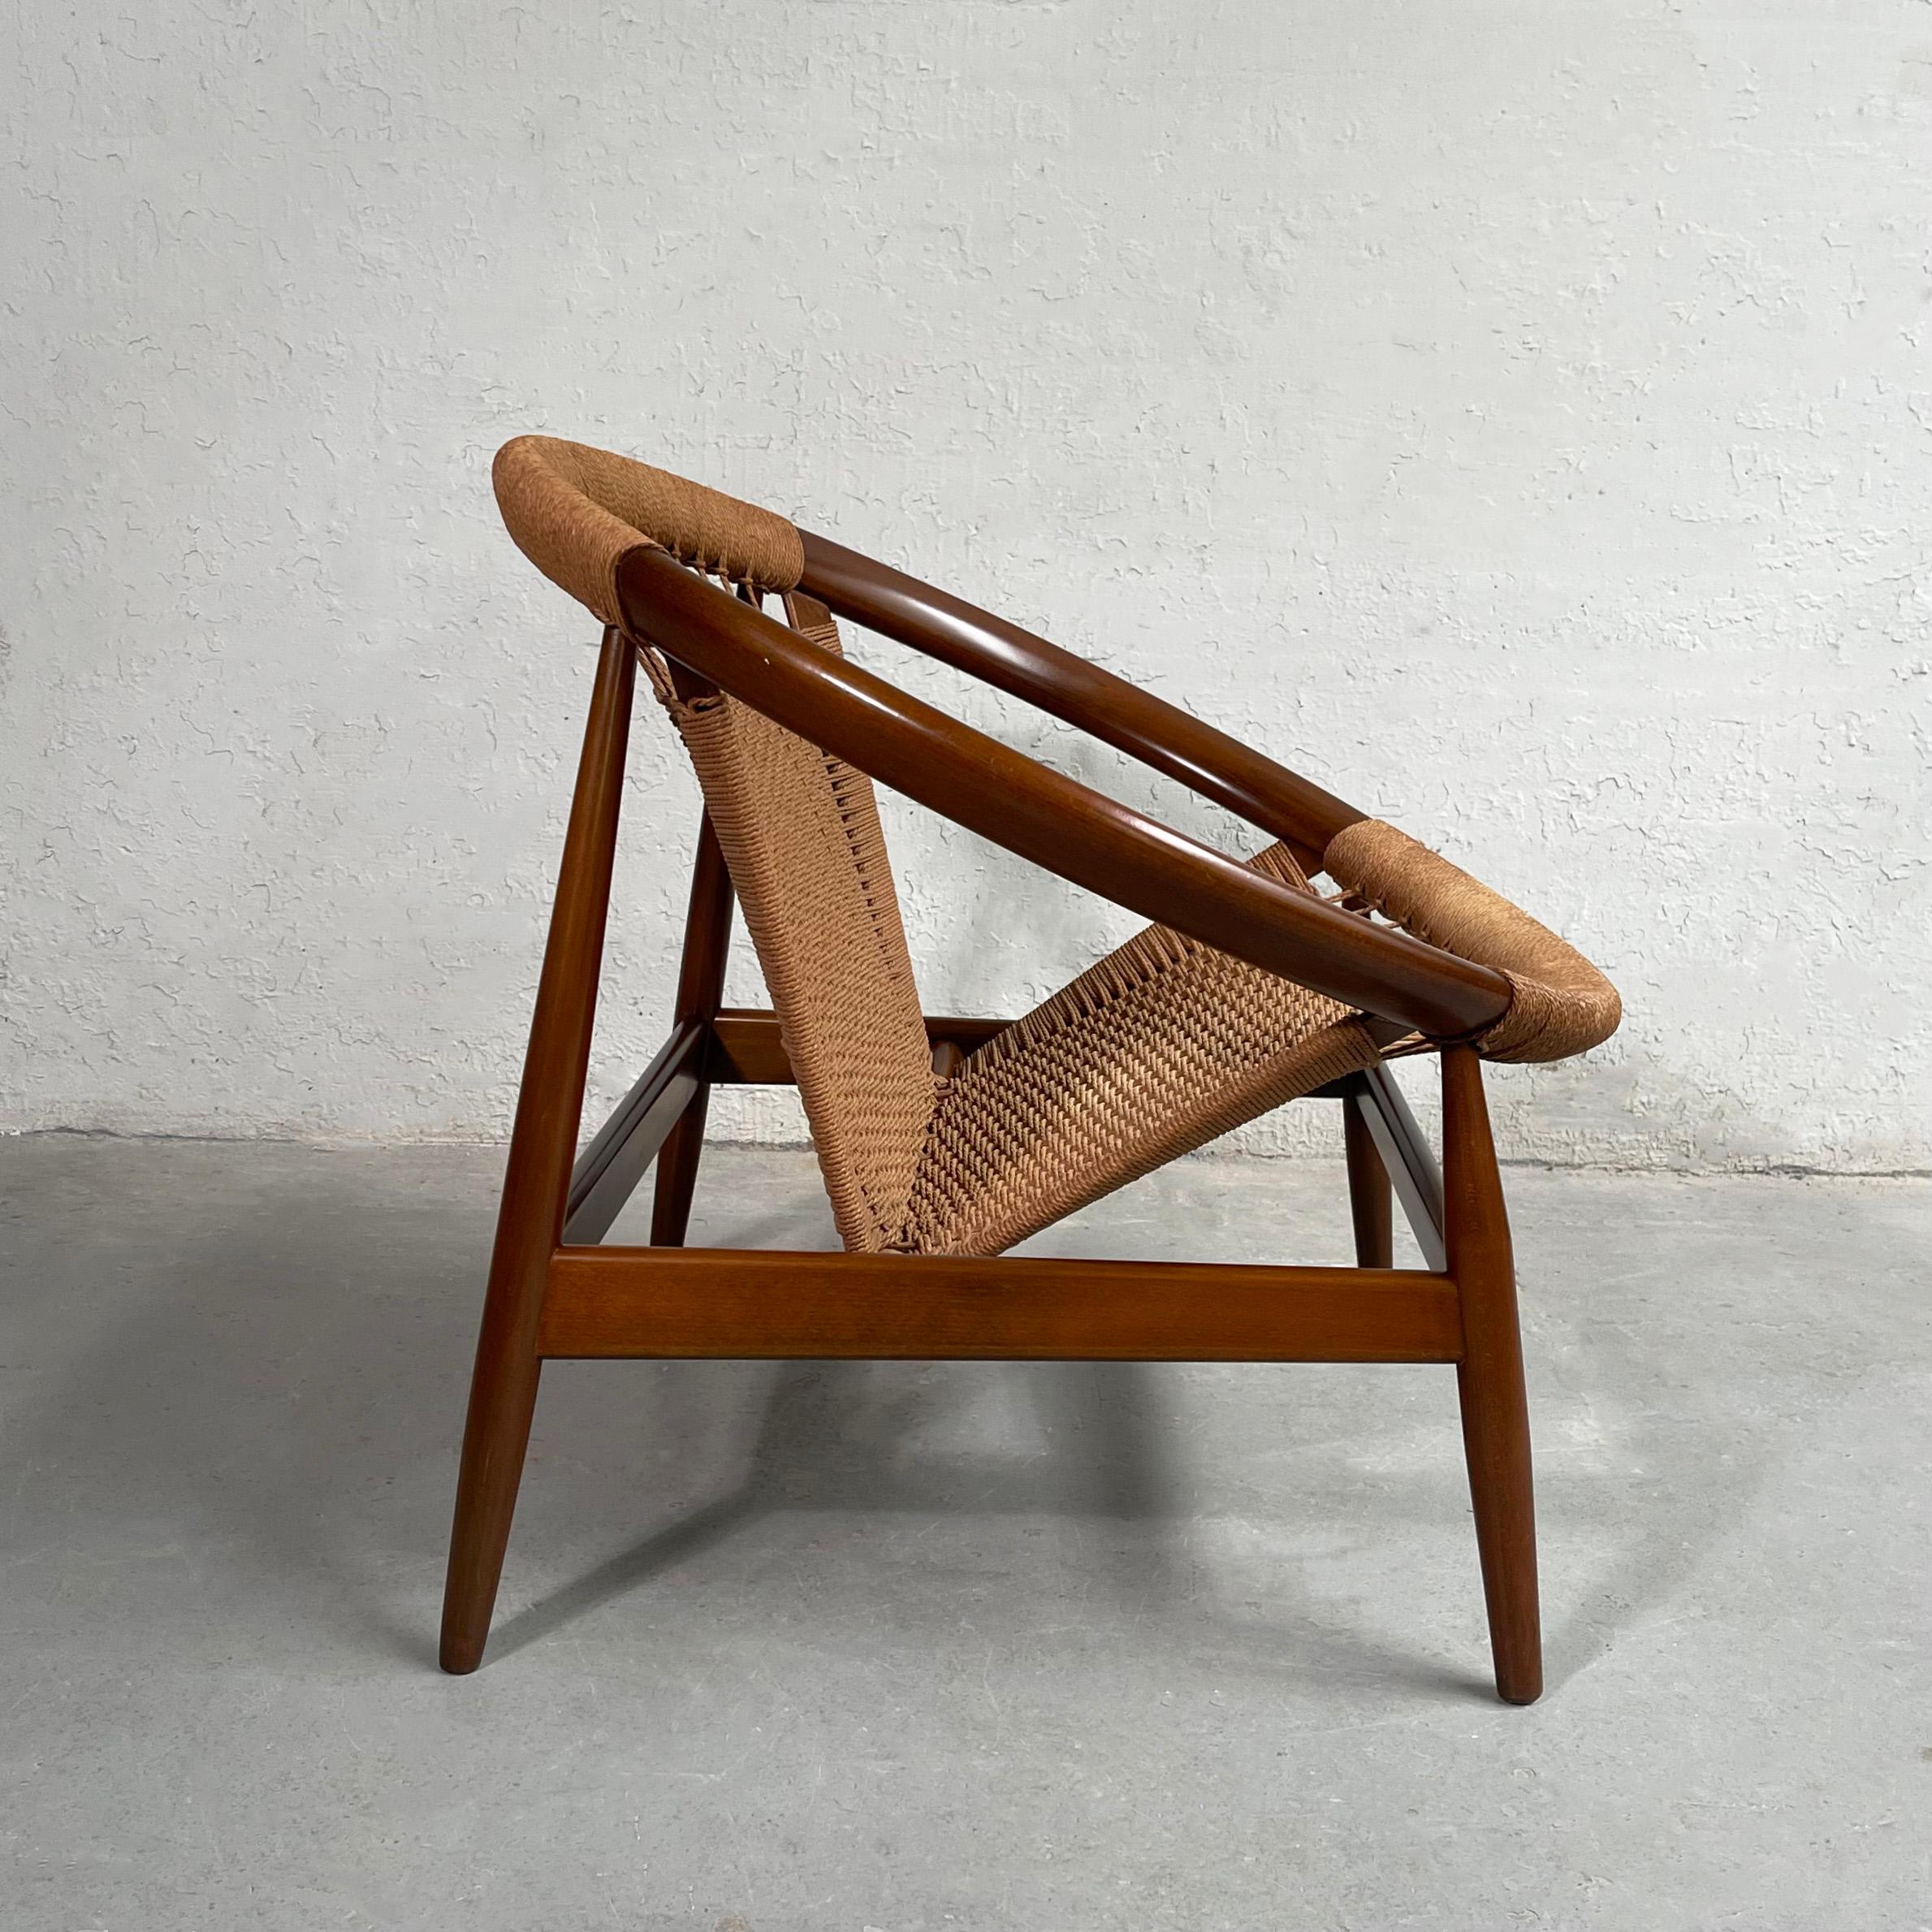 20th Century Scandinavian Modern Ringstol Woven Hoop Chair by Illum Wikkelsø